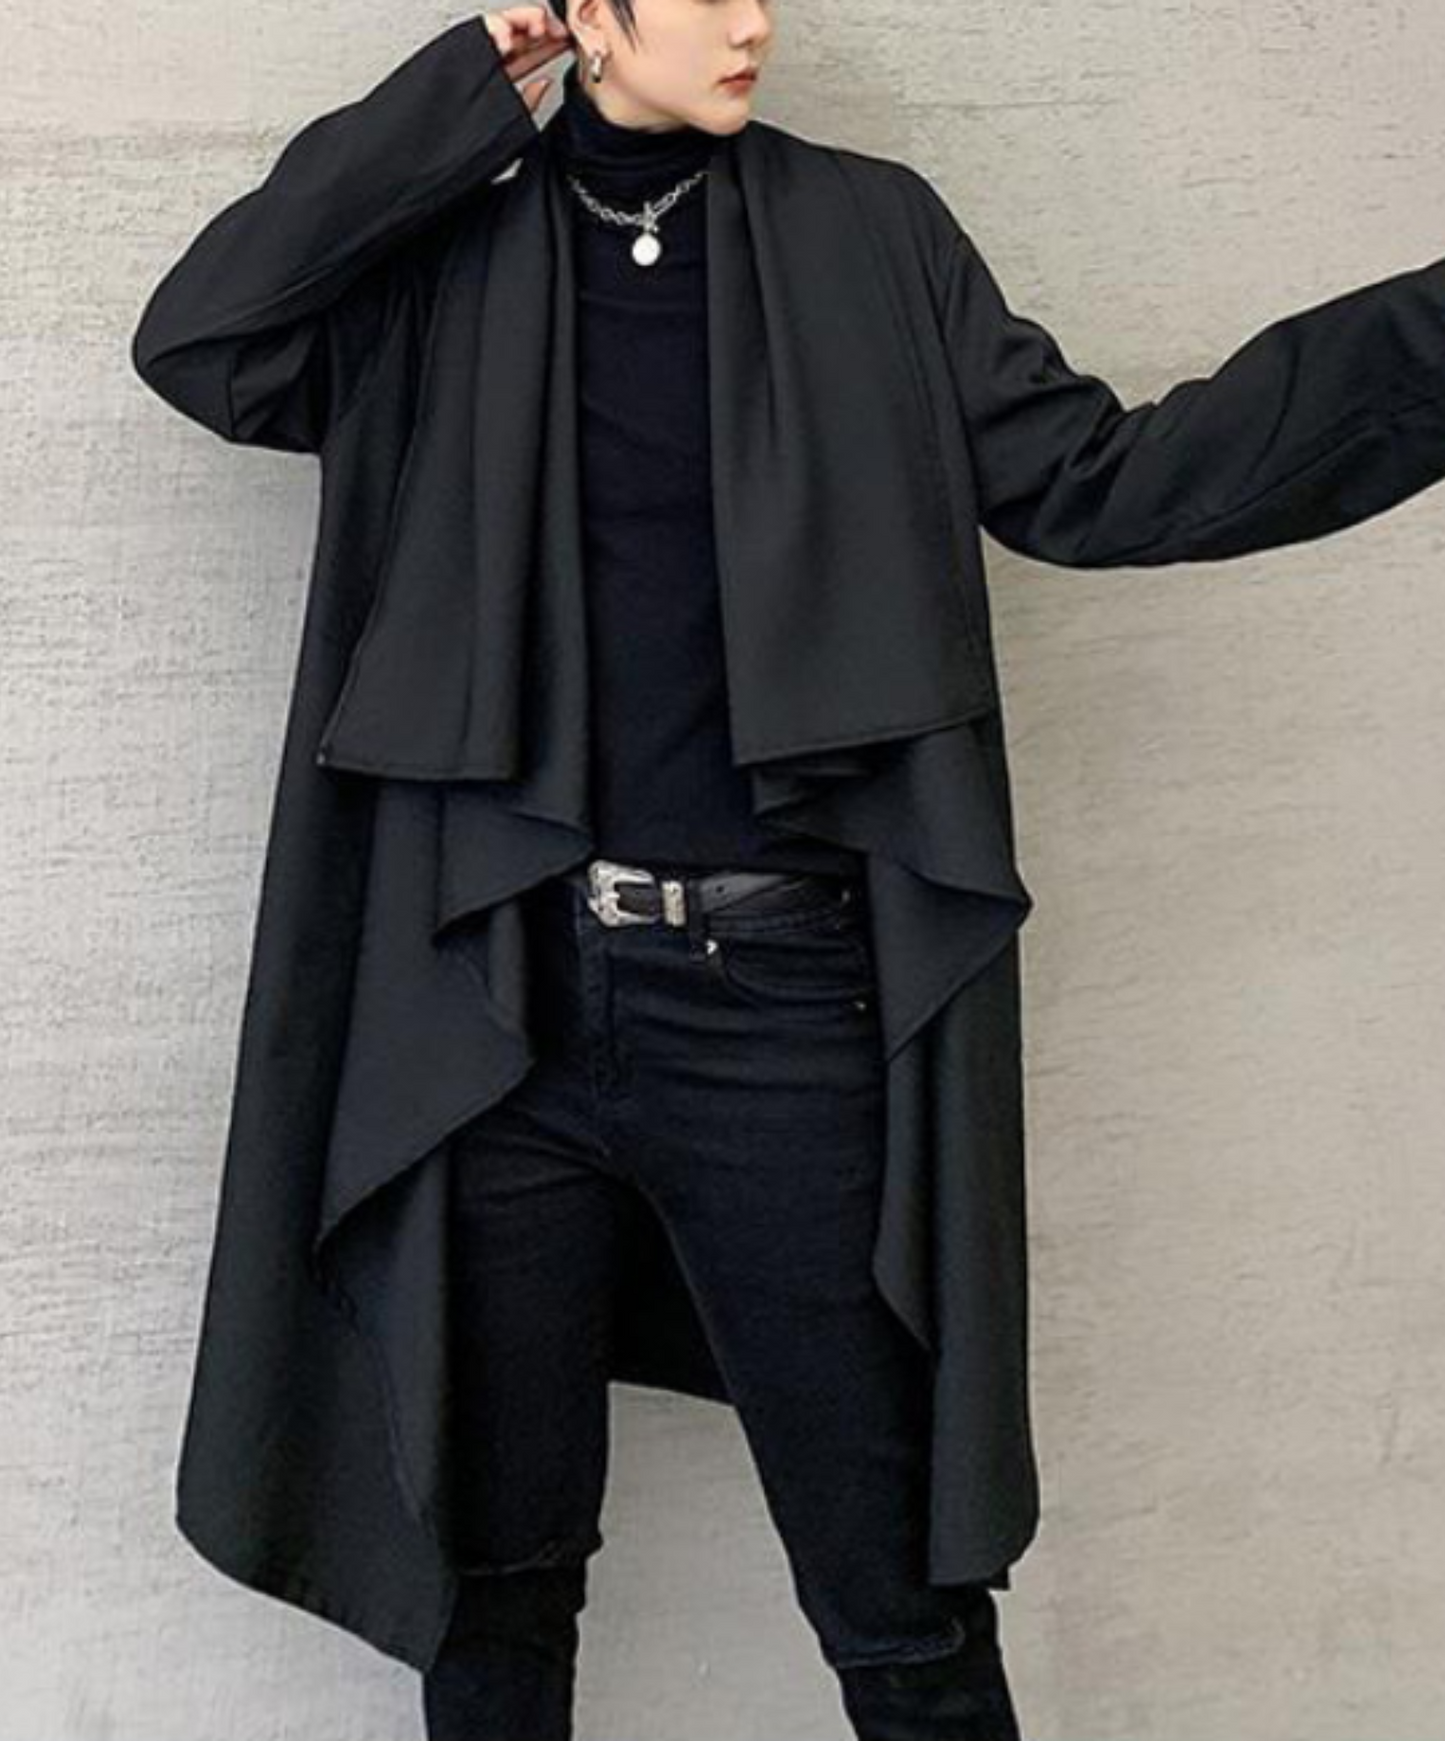 【style20】dark mode outfit set EN931（jacket + pants set）